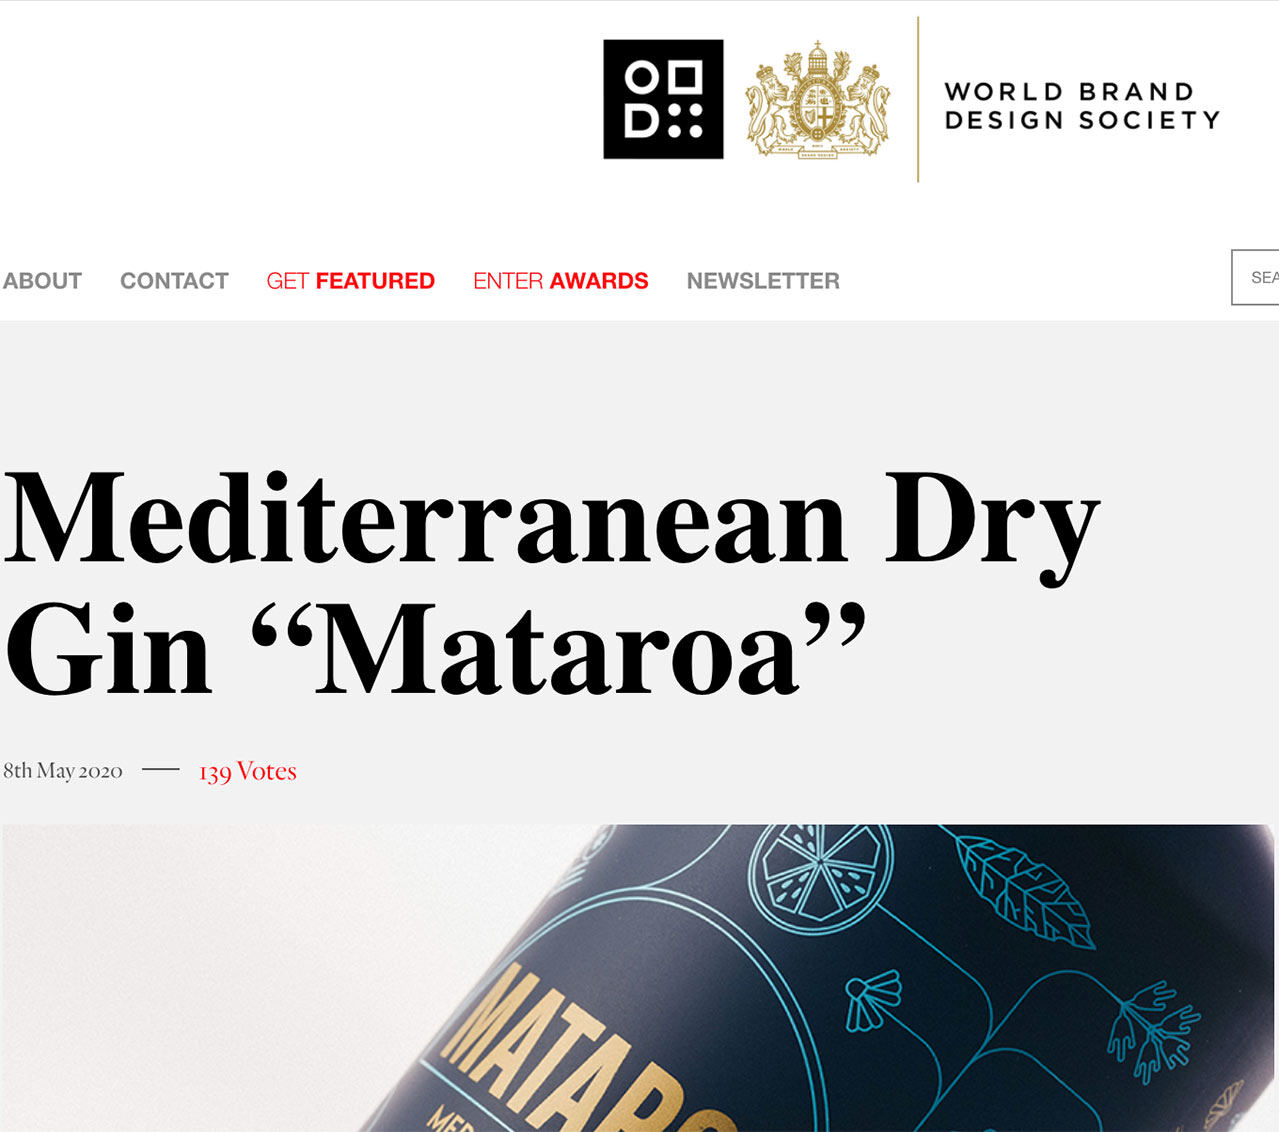 Mataroa Mediterranean Dry Gin featured on World Brand Design Society website